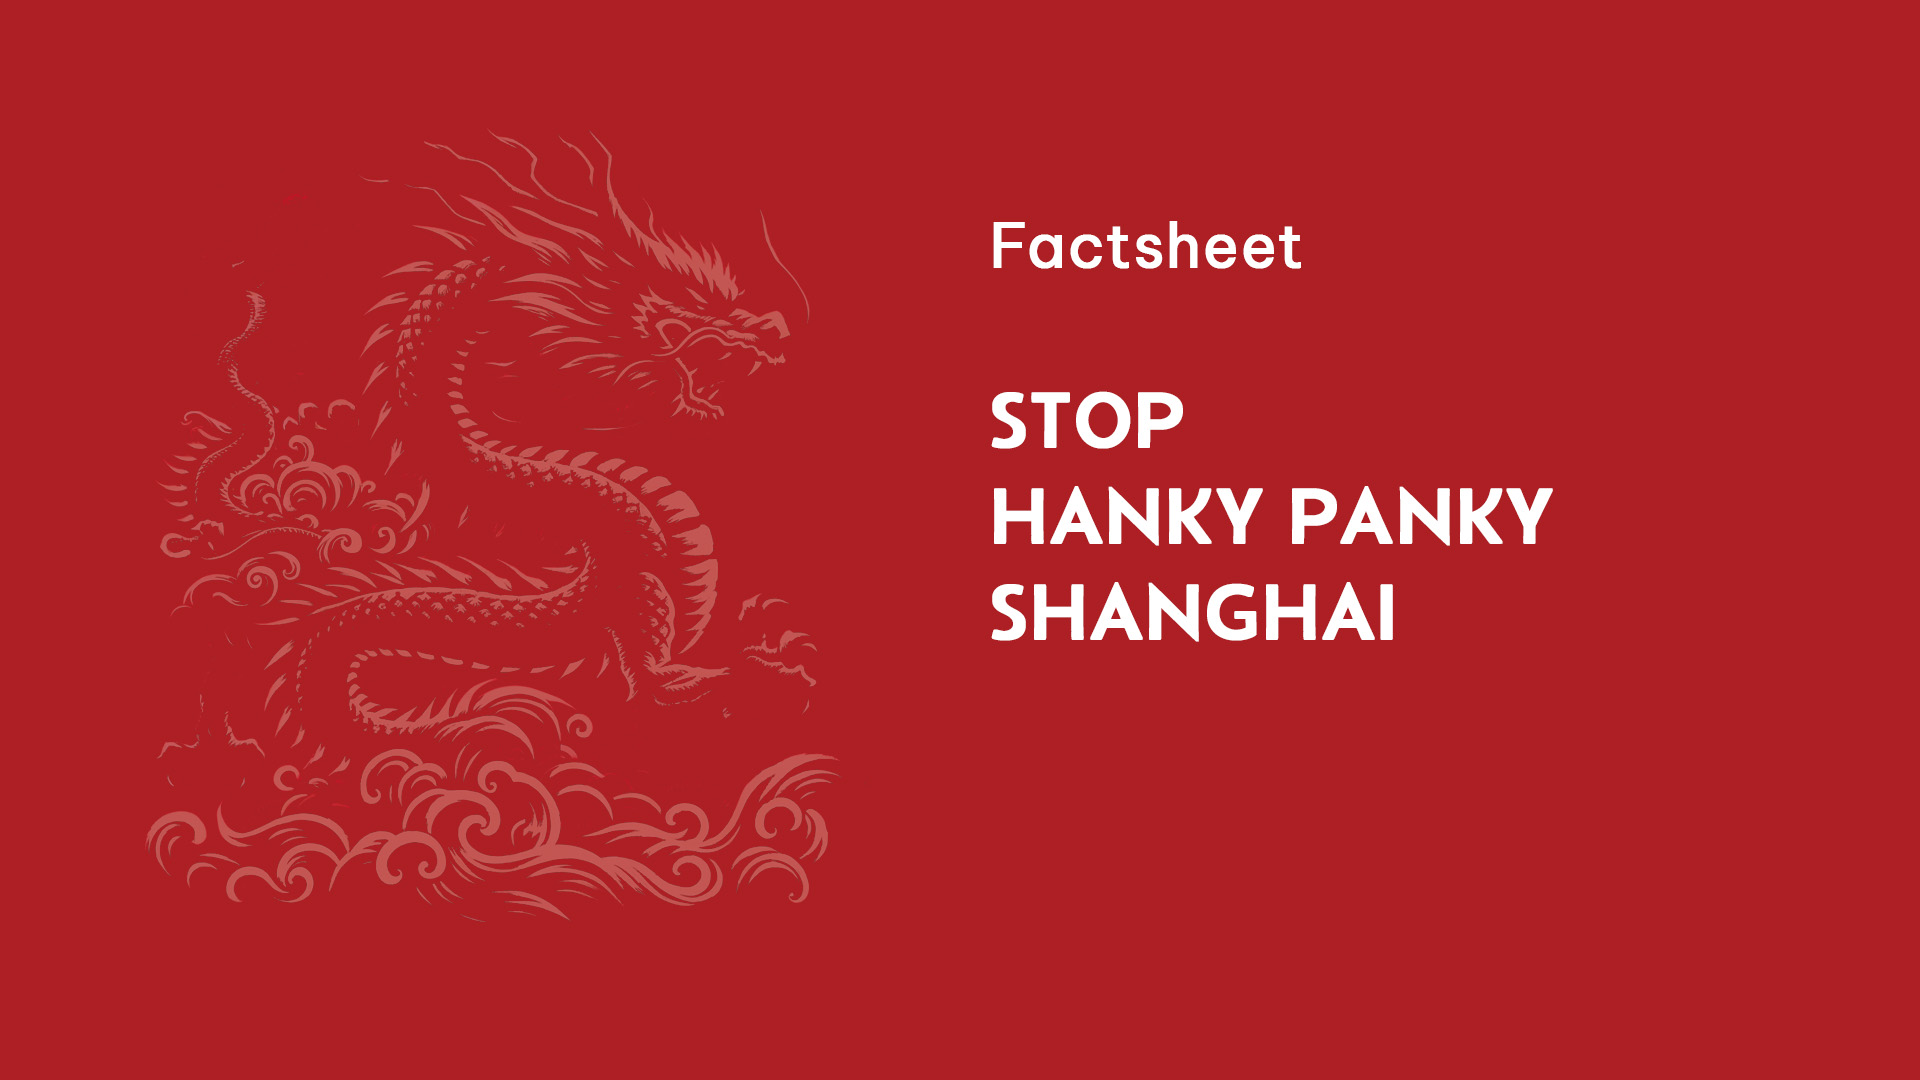 Factsheet “Stop Hanky Panky Shanghai”